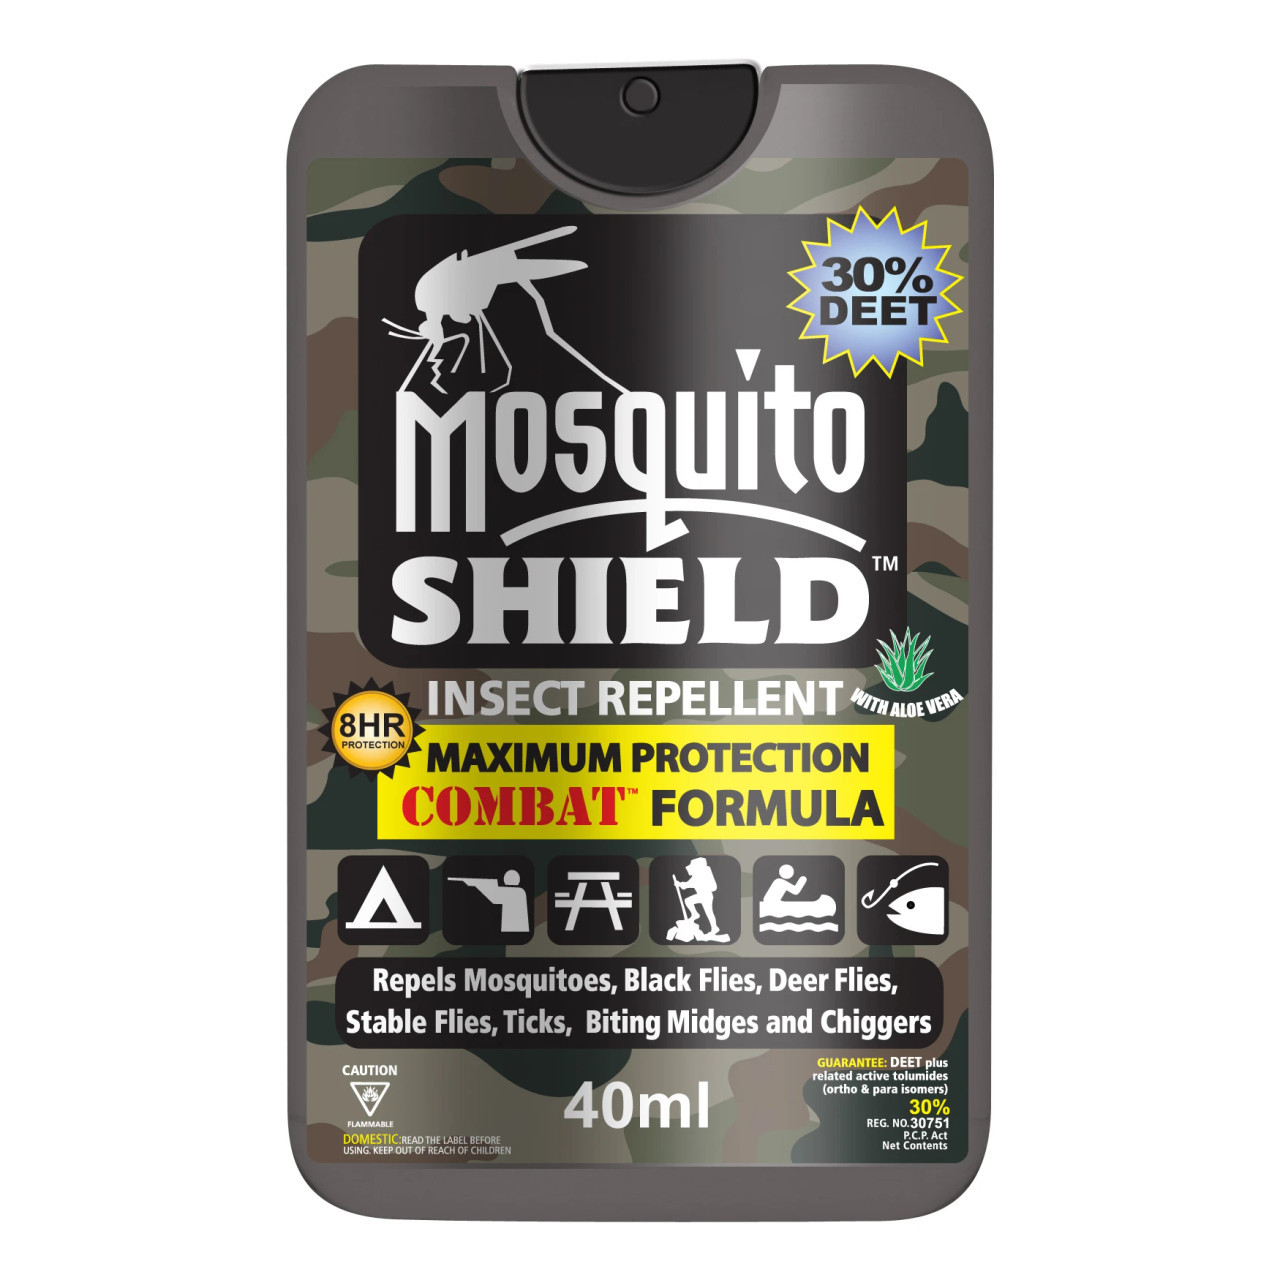 Mosquito Shield Combat Formula Insect Repellent, 30% DEET, 40ml Wallet Size Pump Spray